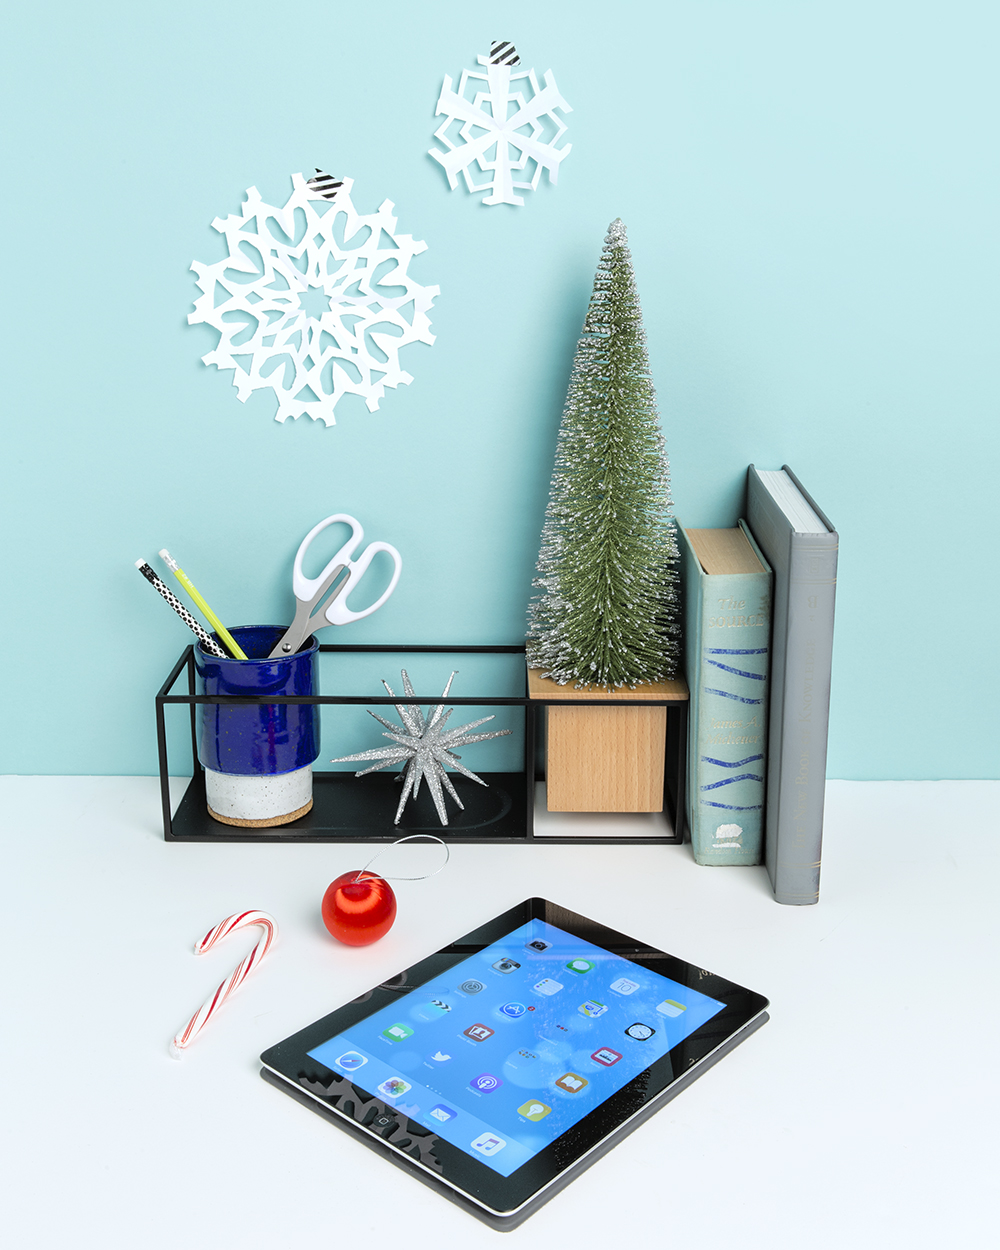 Umbra Holiday 2015 gift guide by happymundane.com